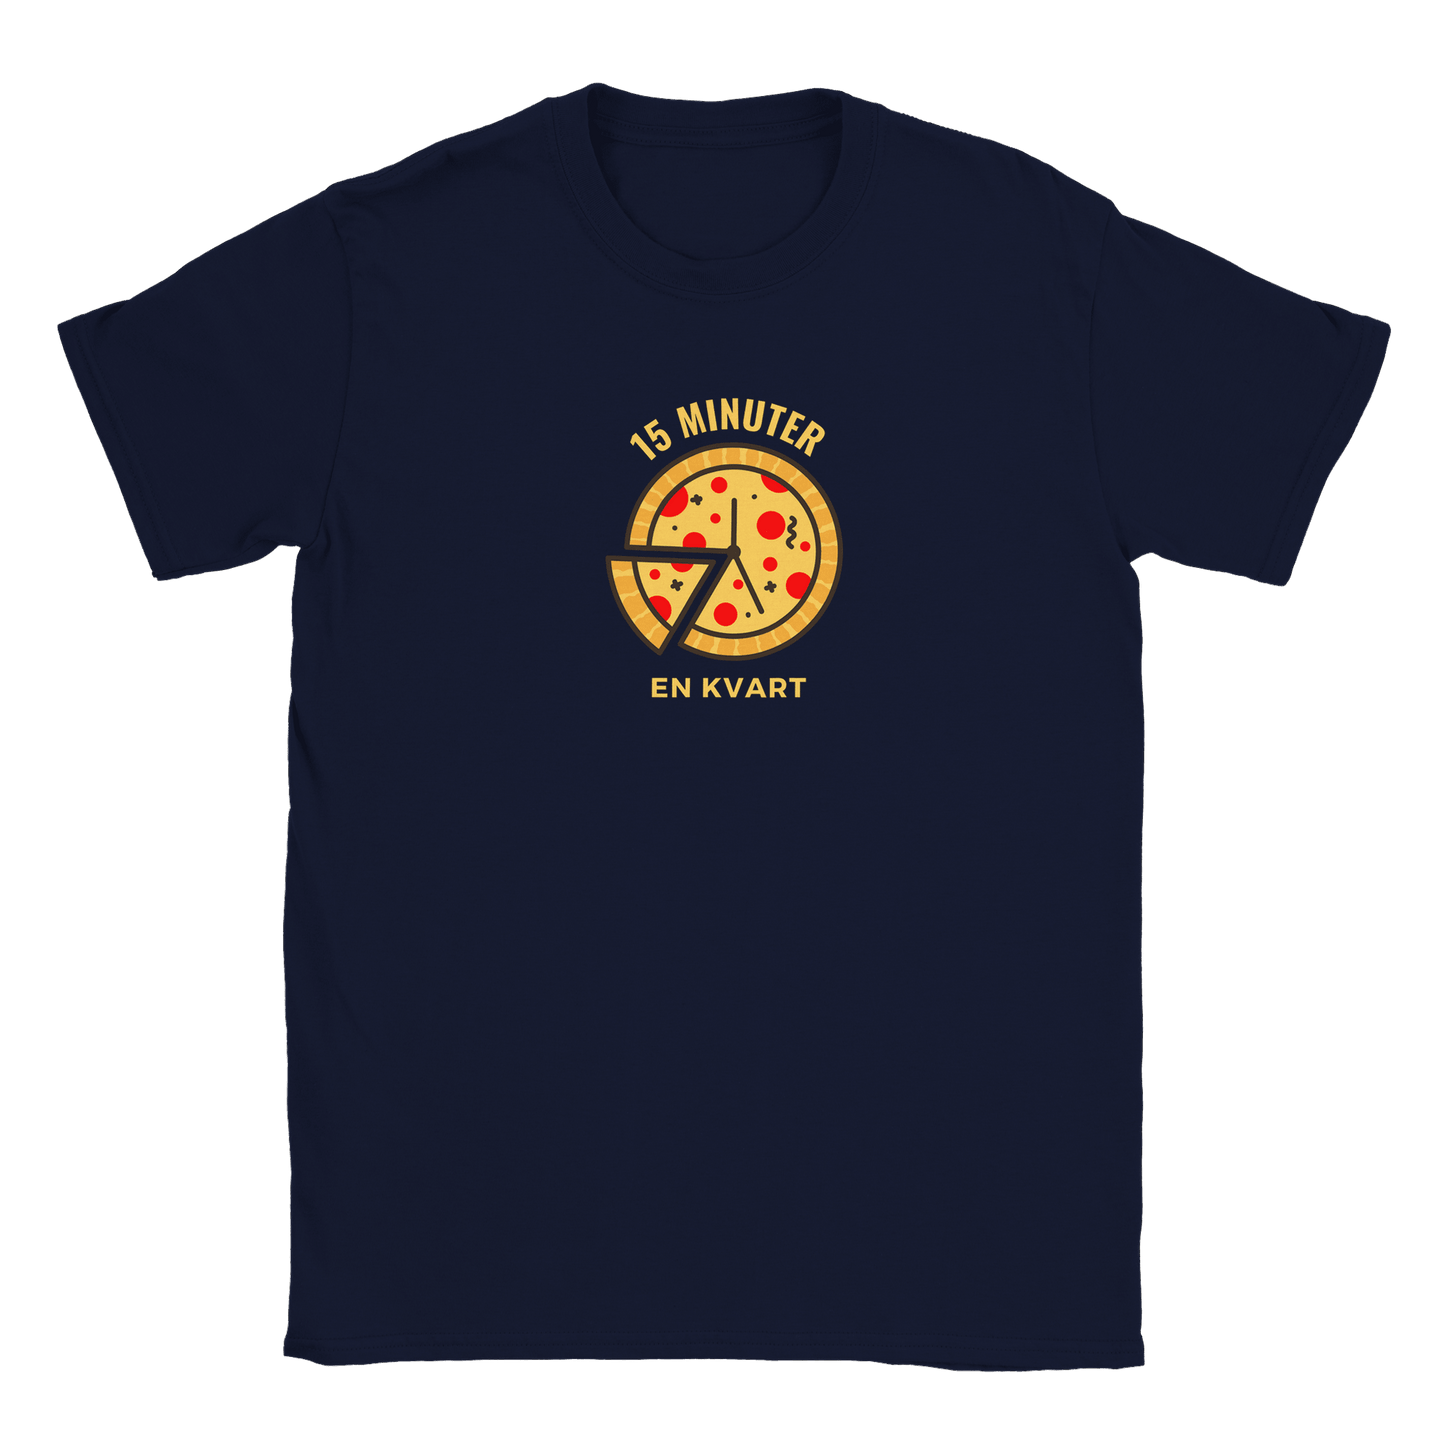 15 minuter en kvart - T-shirt Navy